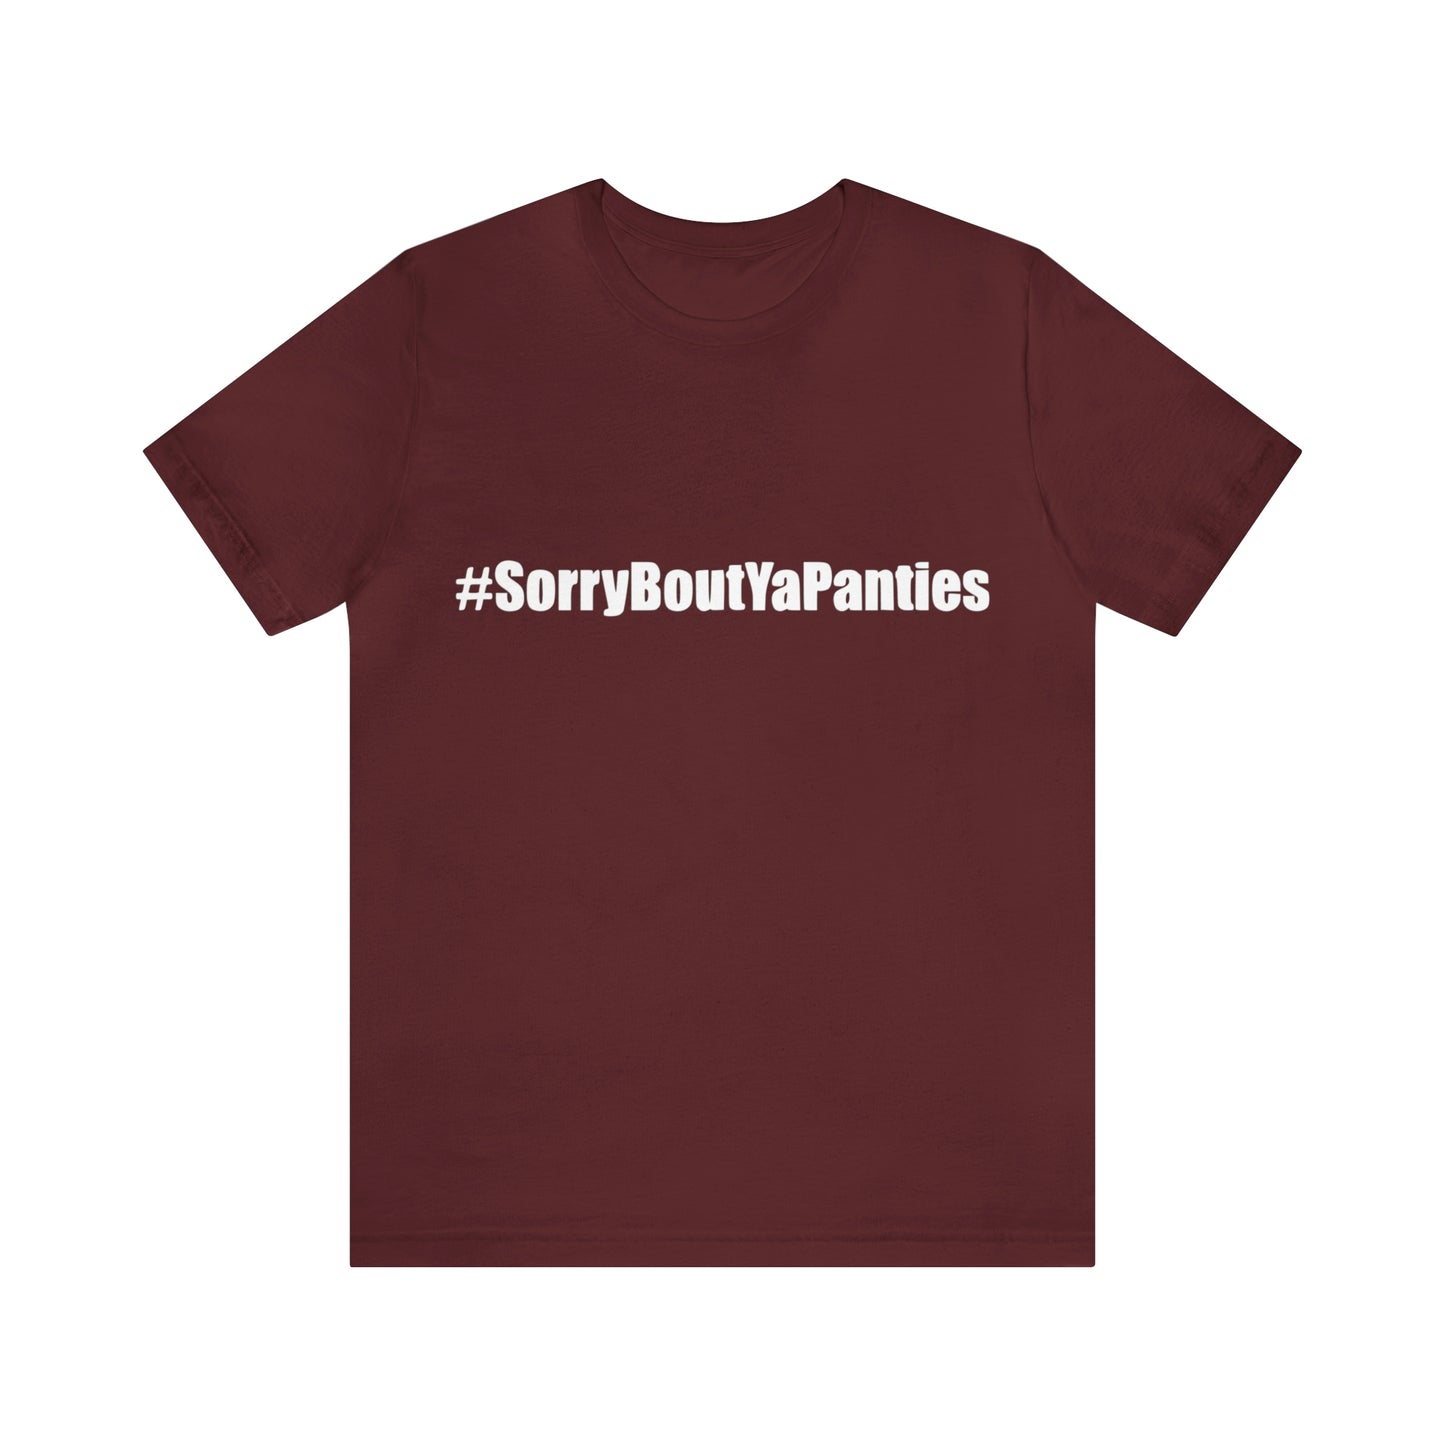 Sorry bout ya panties - Unisex T-Shirt